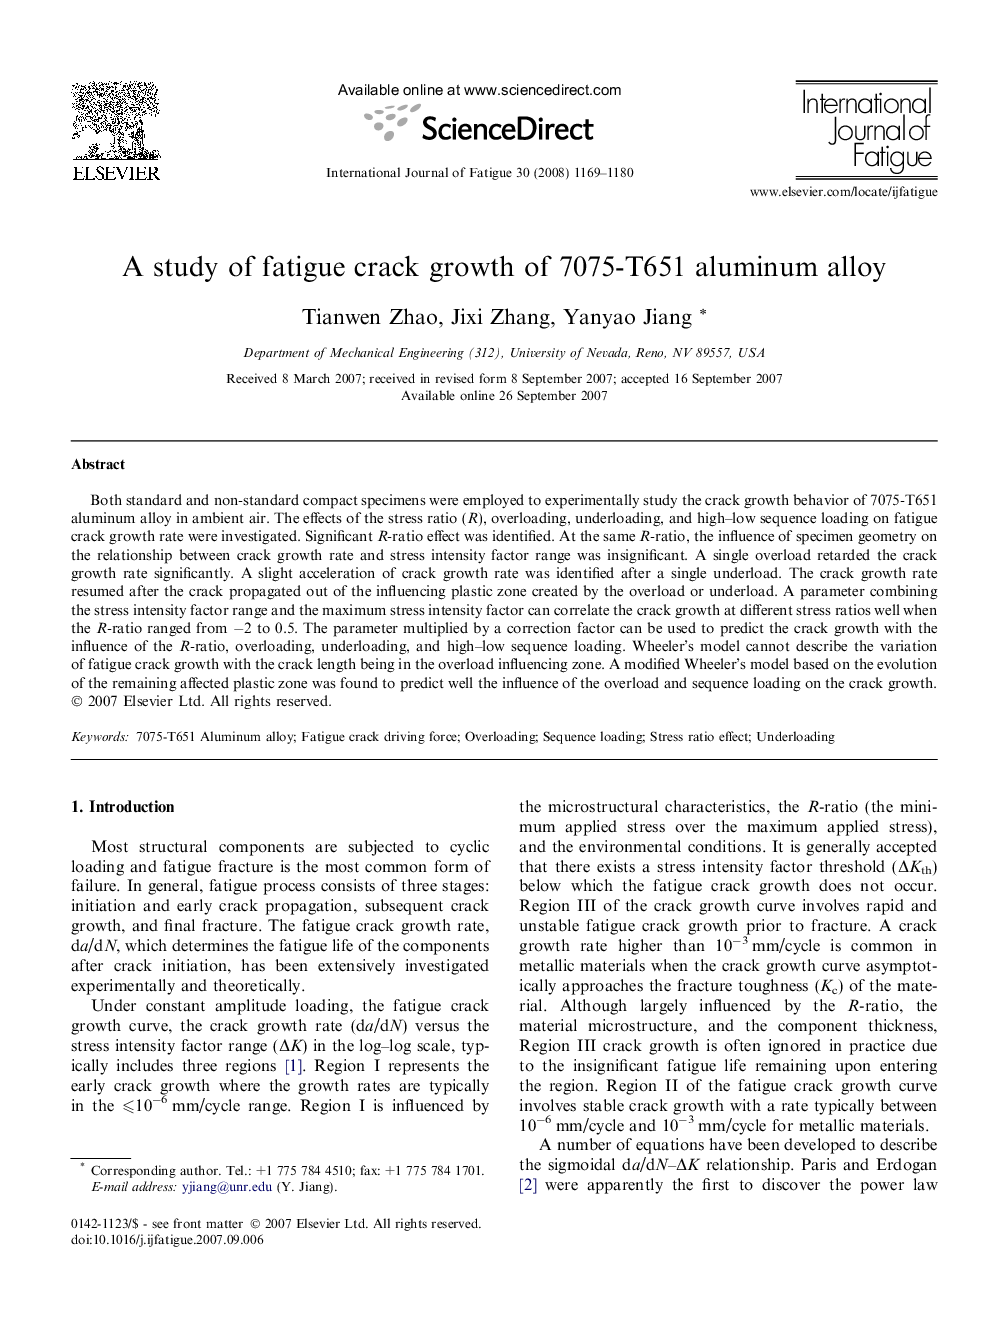 A study of fatigue crack growth of 7075-T651 aluminum alloy